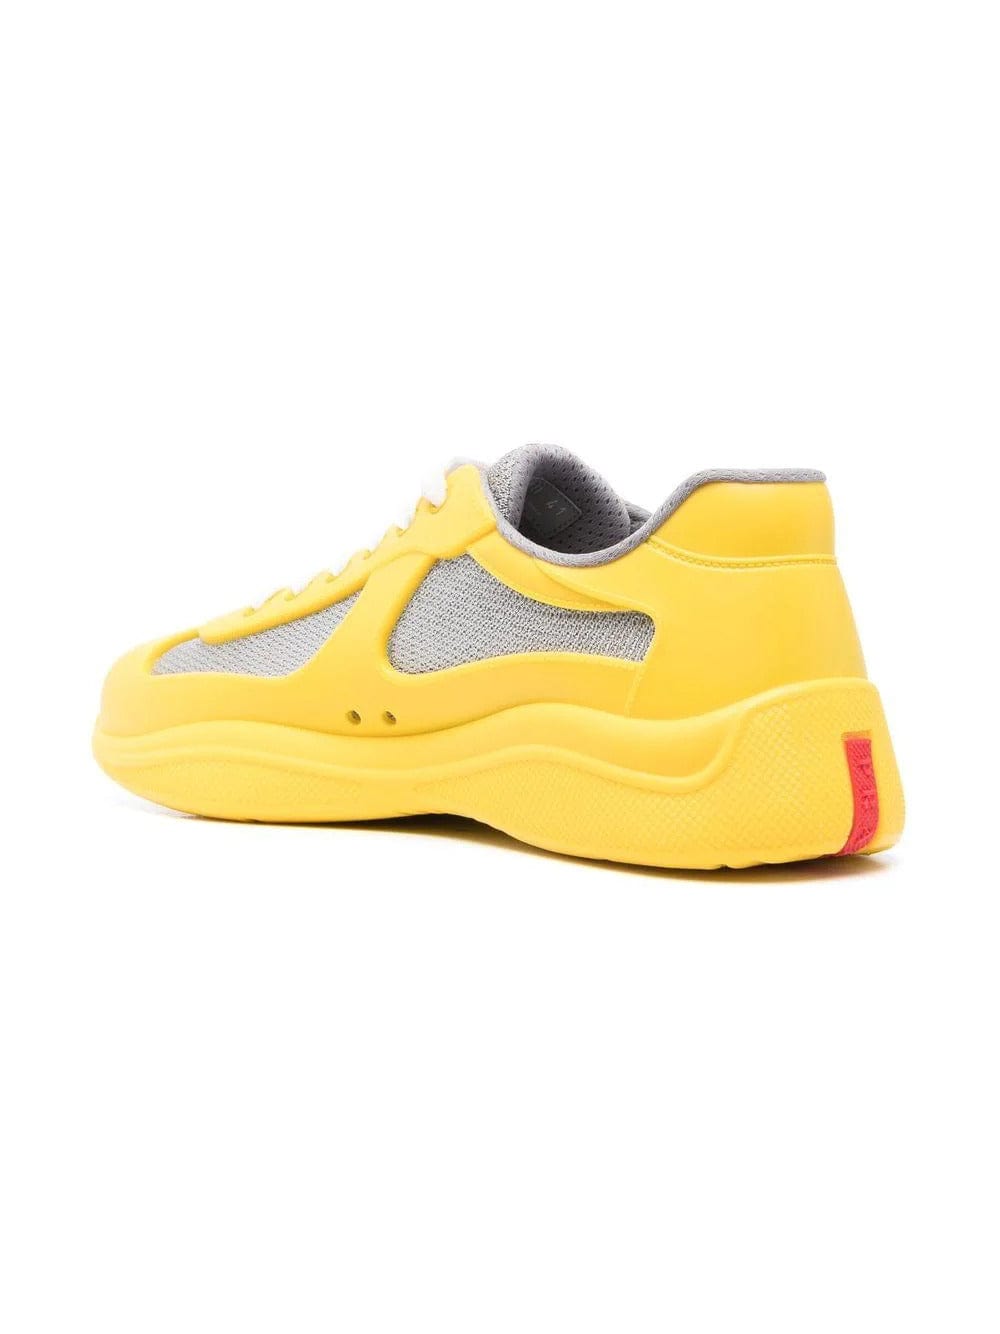 Prada America's Cup Yellow Sneaker – Aztec Clothing